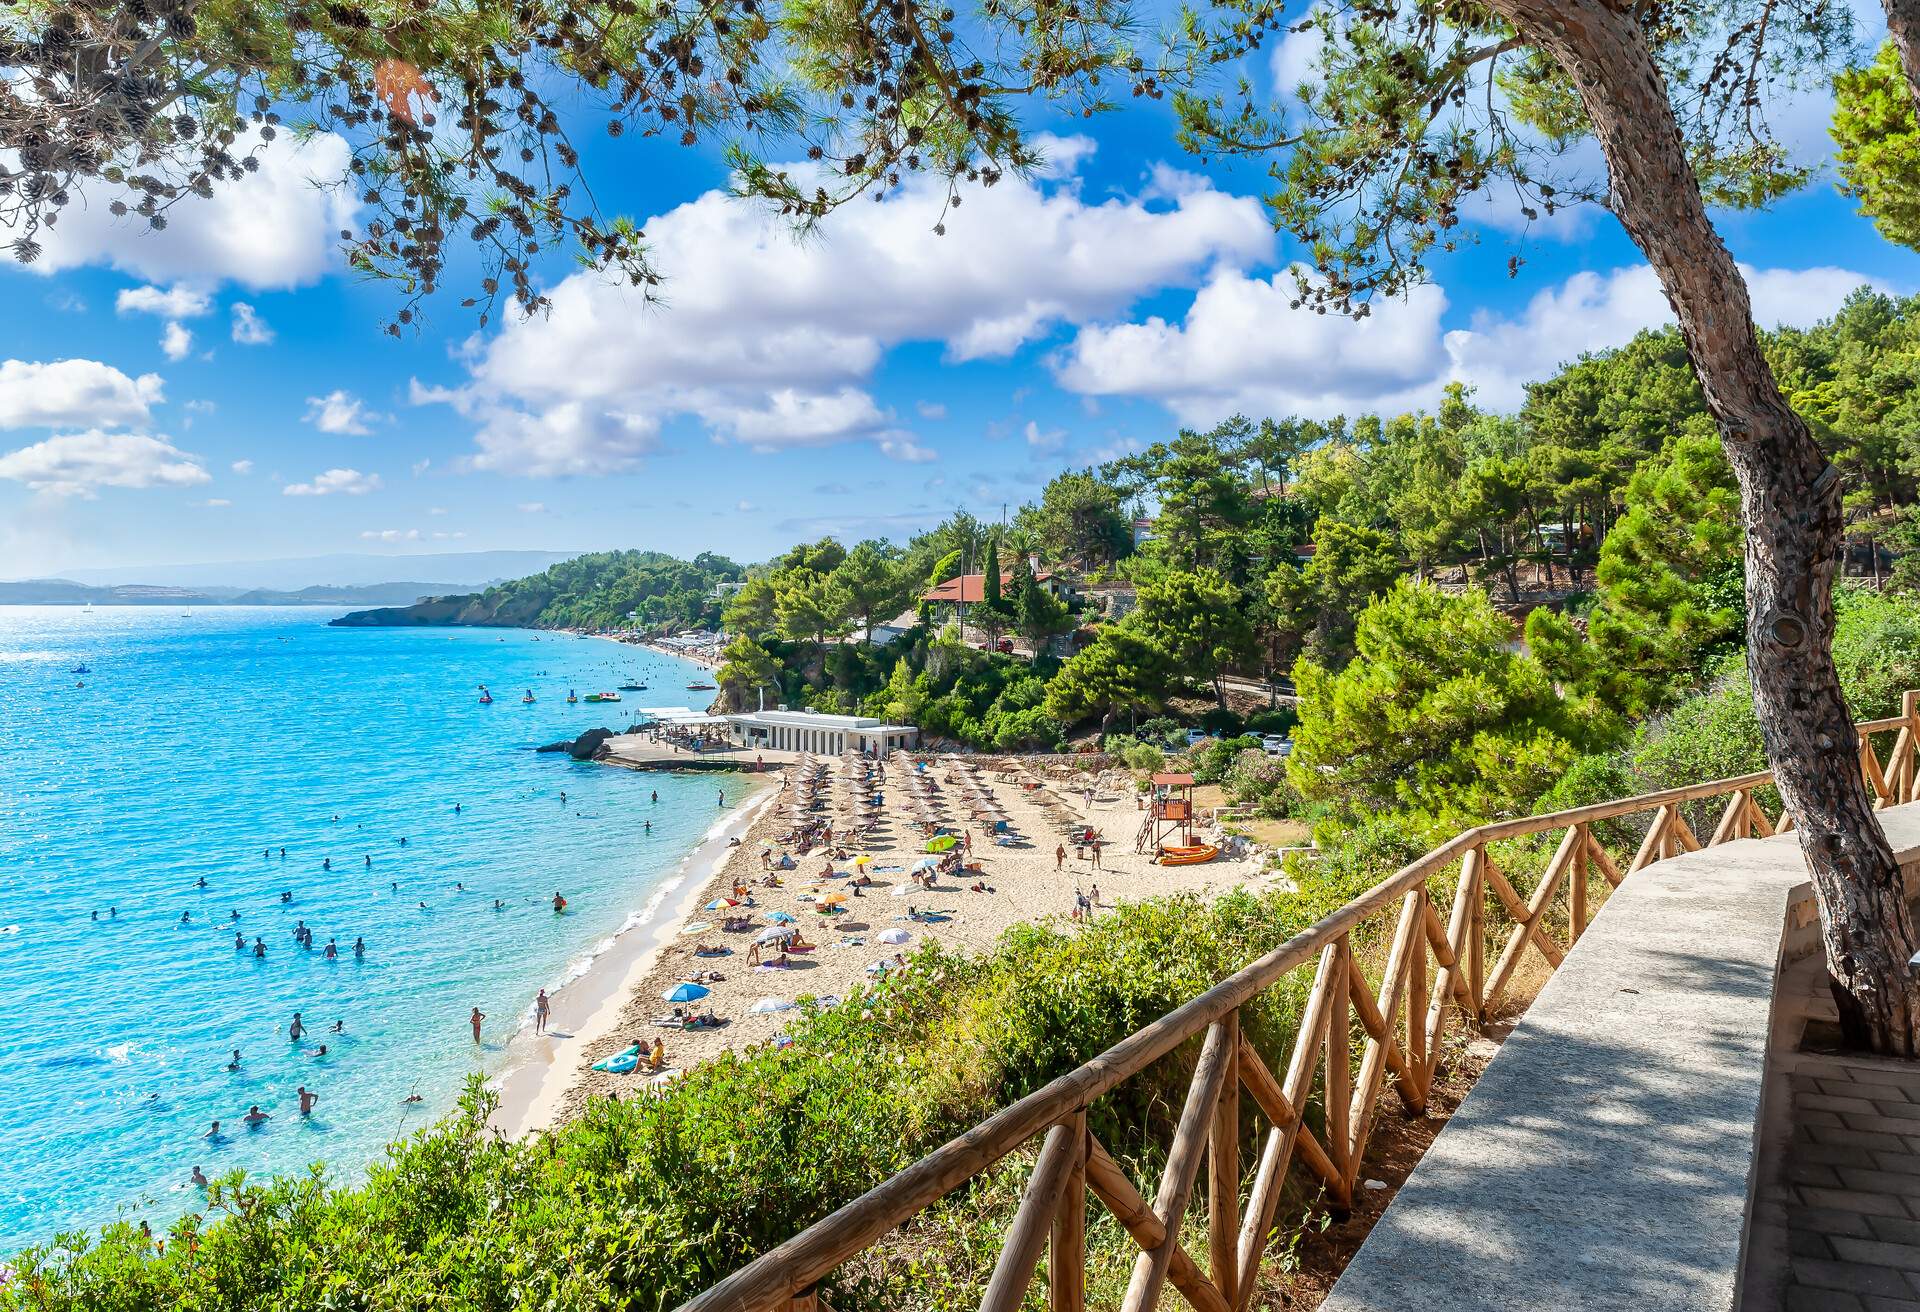 Landscape with Platis Gialos beach in Kefalonia, Ionian island, Greece